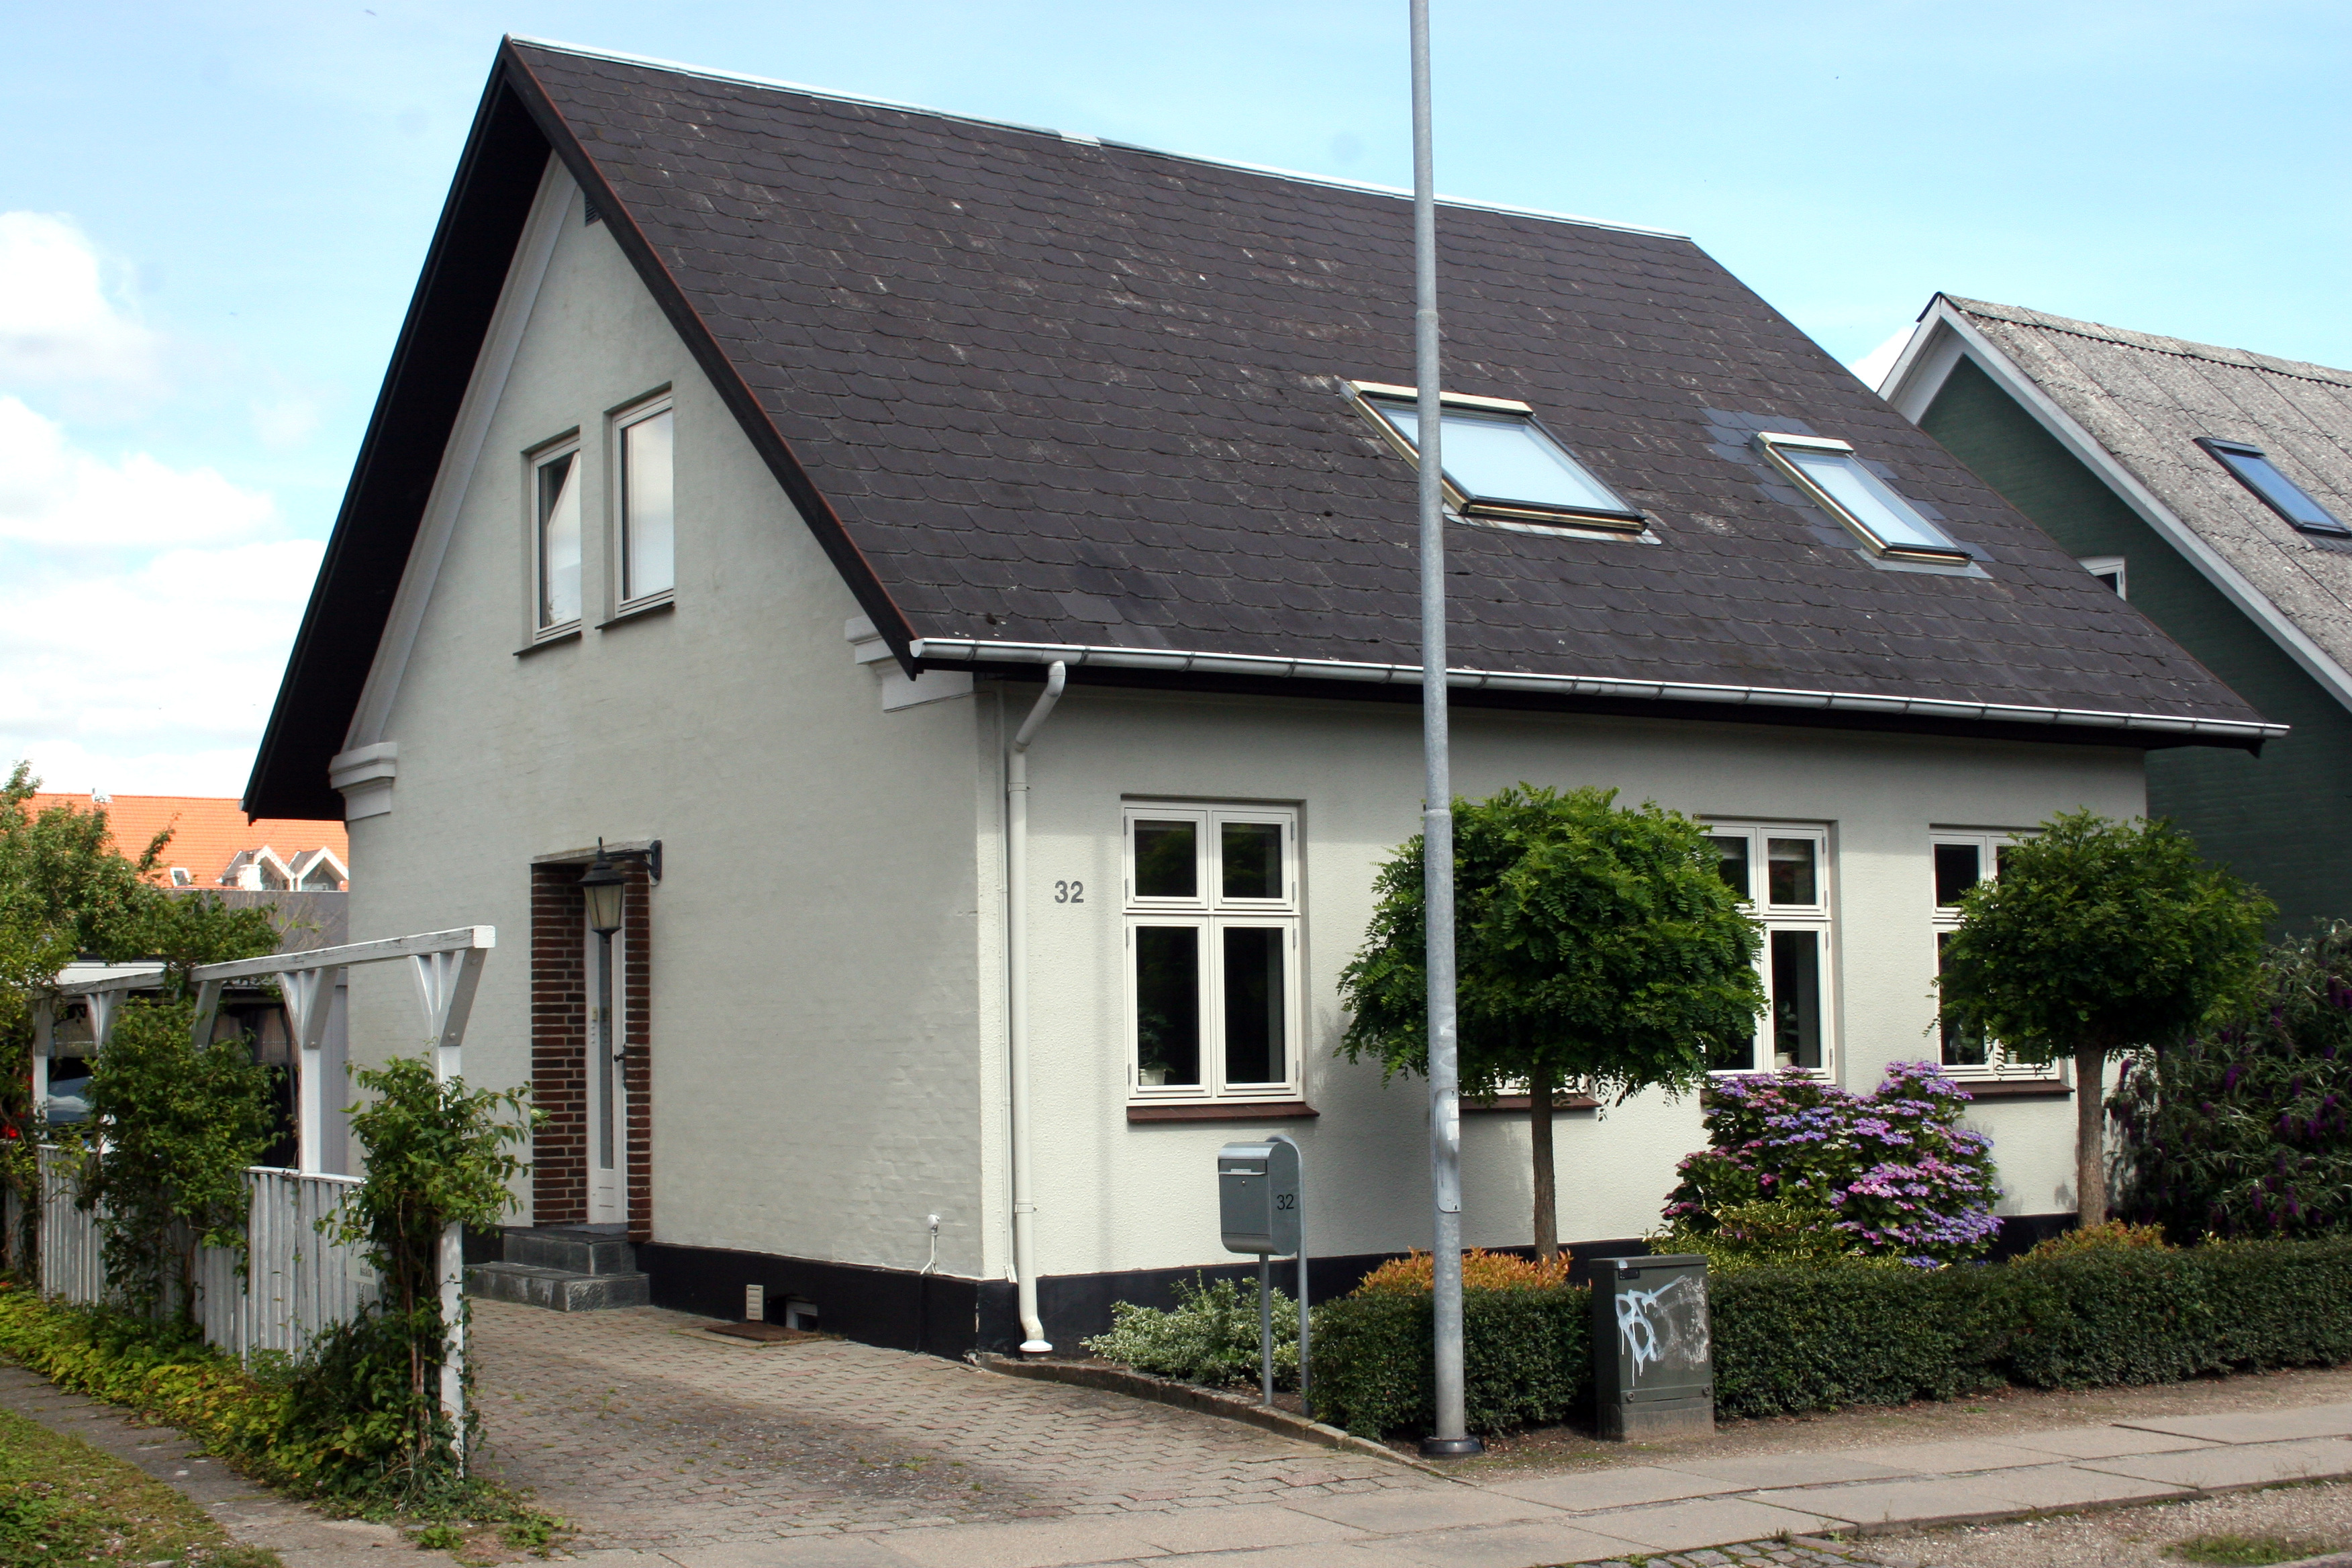 Egensevej 32 – 5700 Svendborg